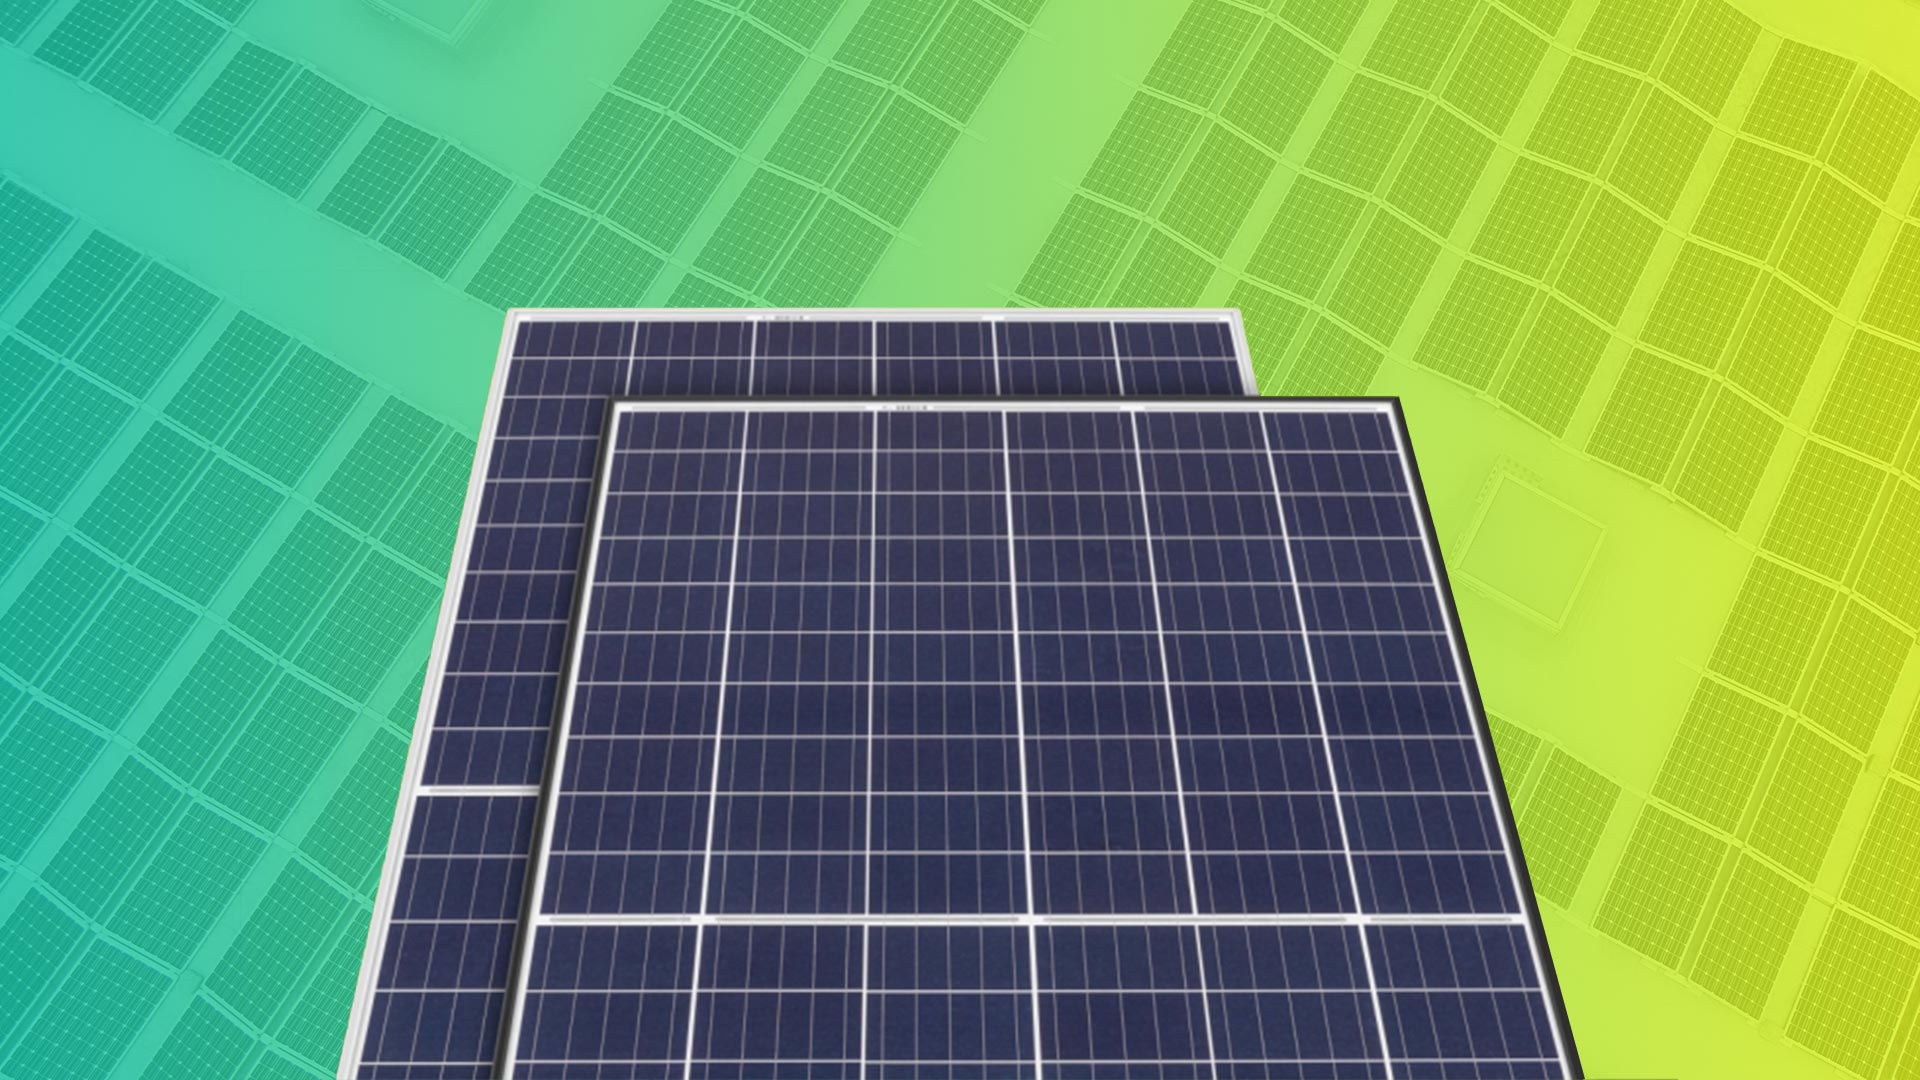 SAVE LG Solar Panels Perth WA NeON 2 NeON R Models 